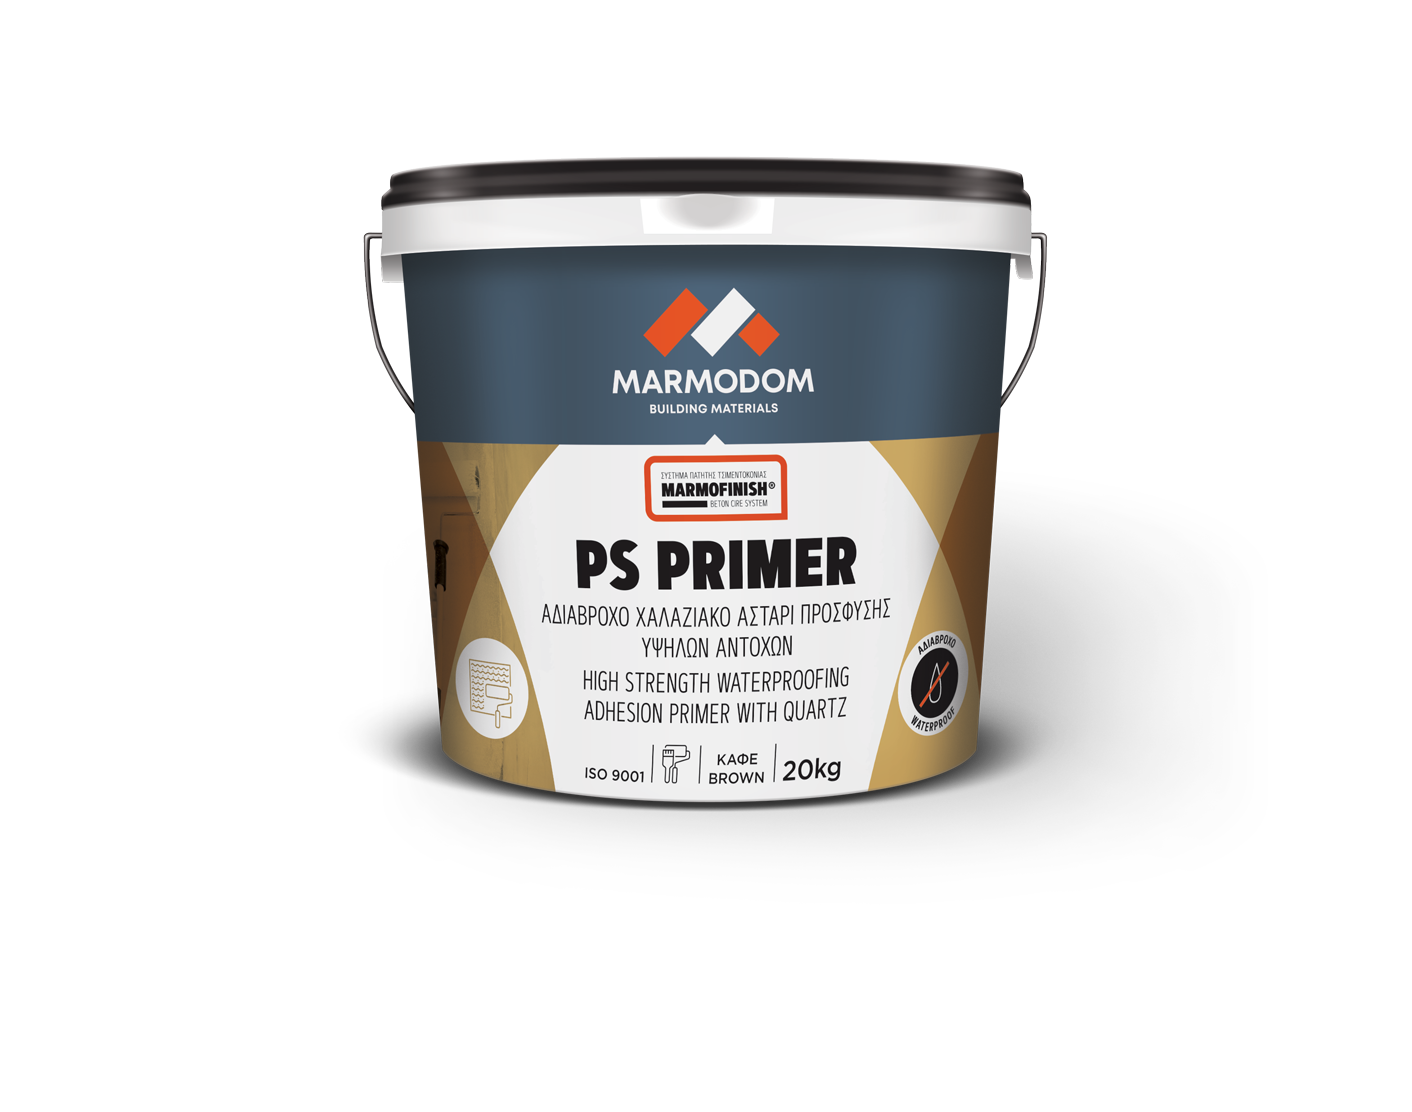 Marmodom PS PRIMER 20kg Waterproof high strength quartz primer (brown)